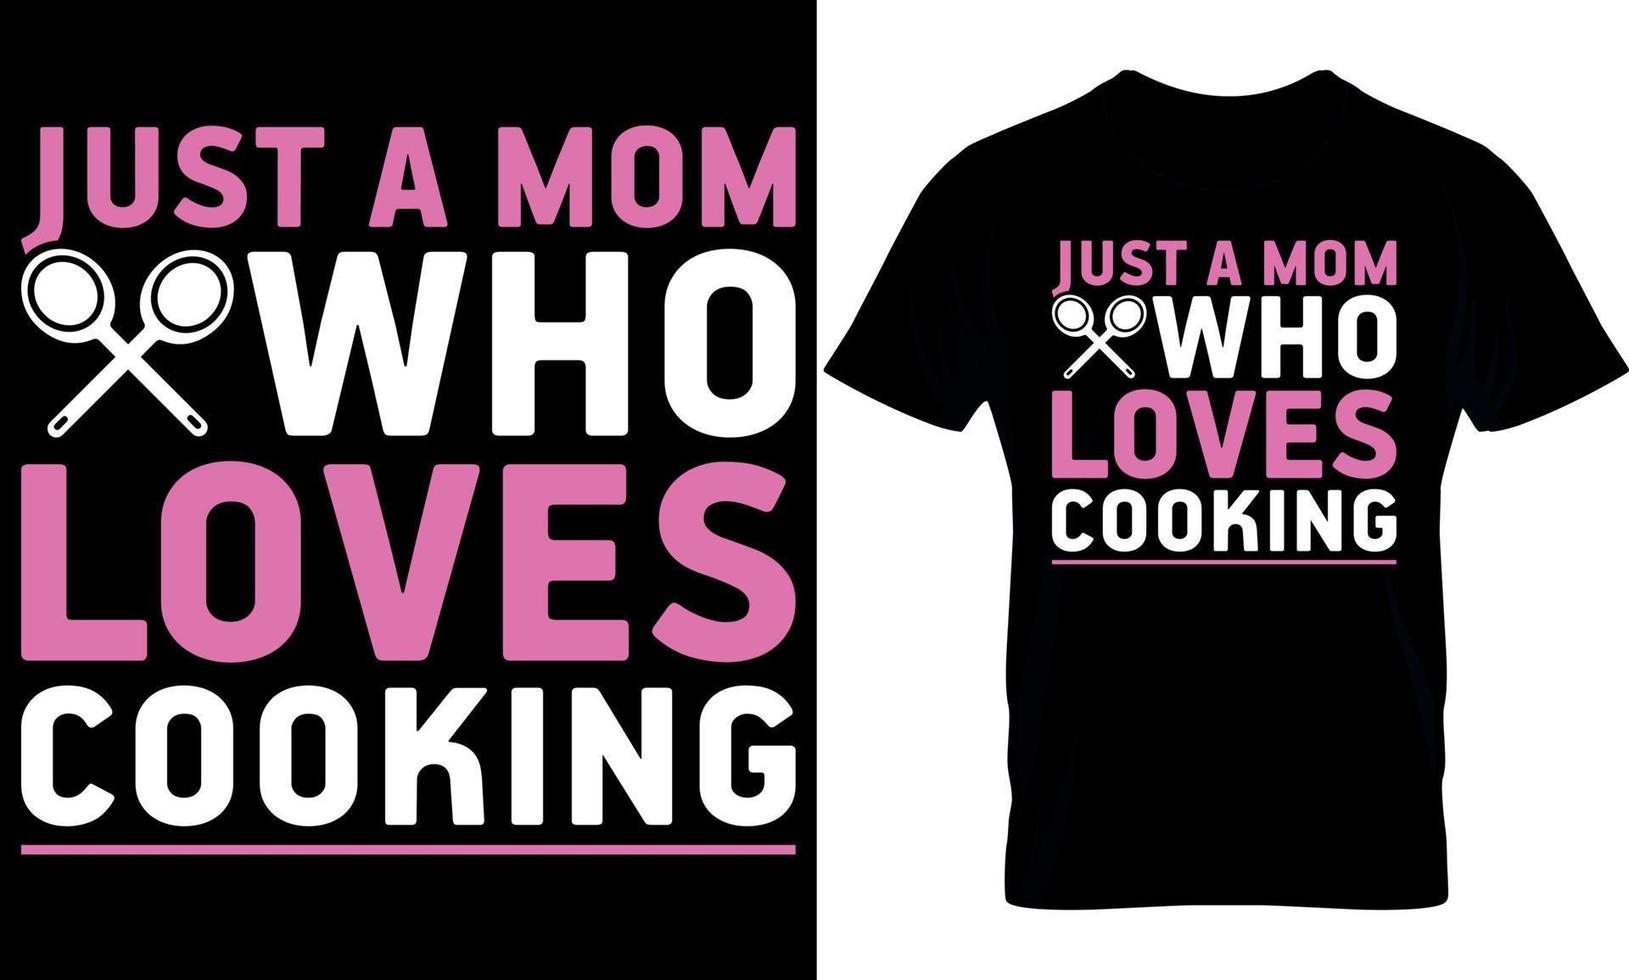 juste une maman qui aime cuisson. cuisine T-shirt conception, cuisine t chemise conception, cuisine conception, cuisinier T-shirt conception, cuisinier t chemise conception, vecteur